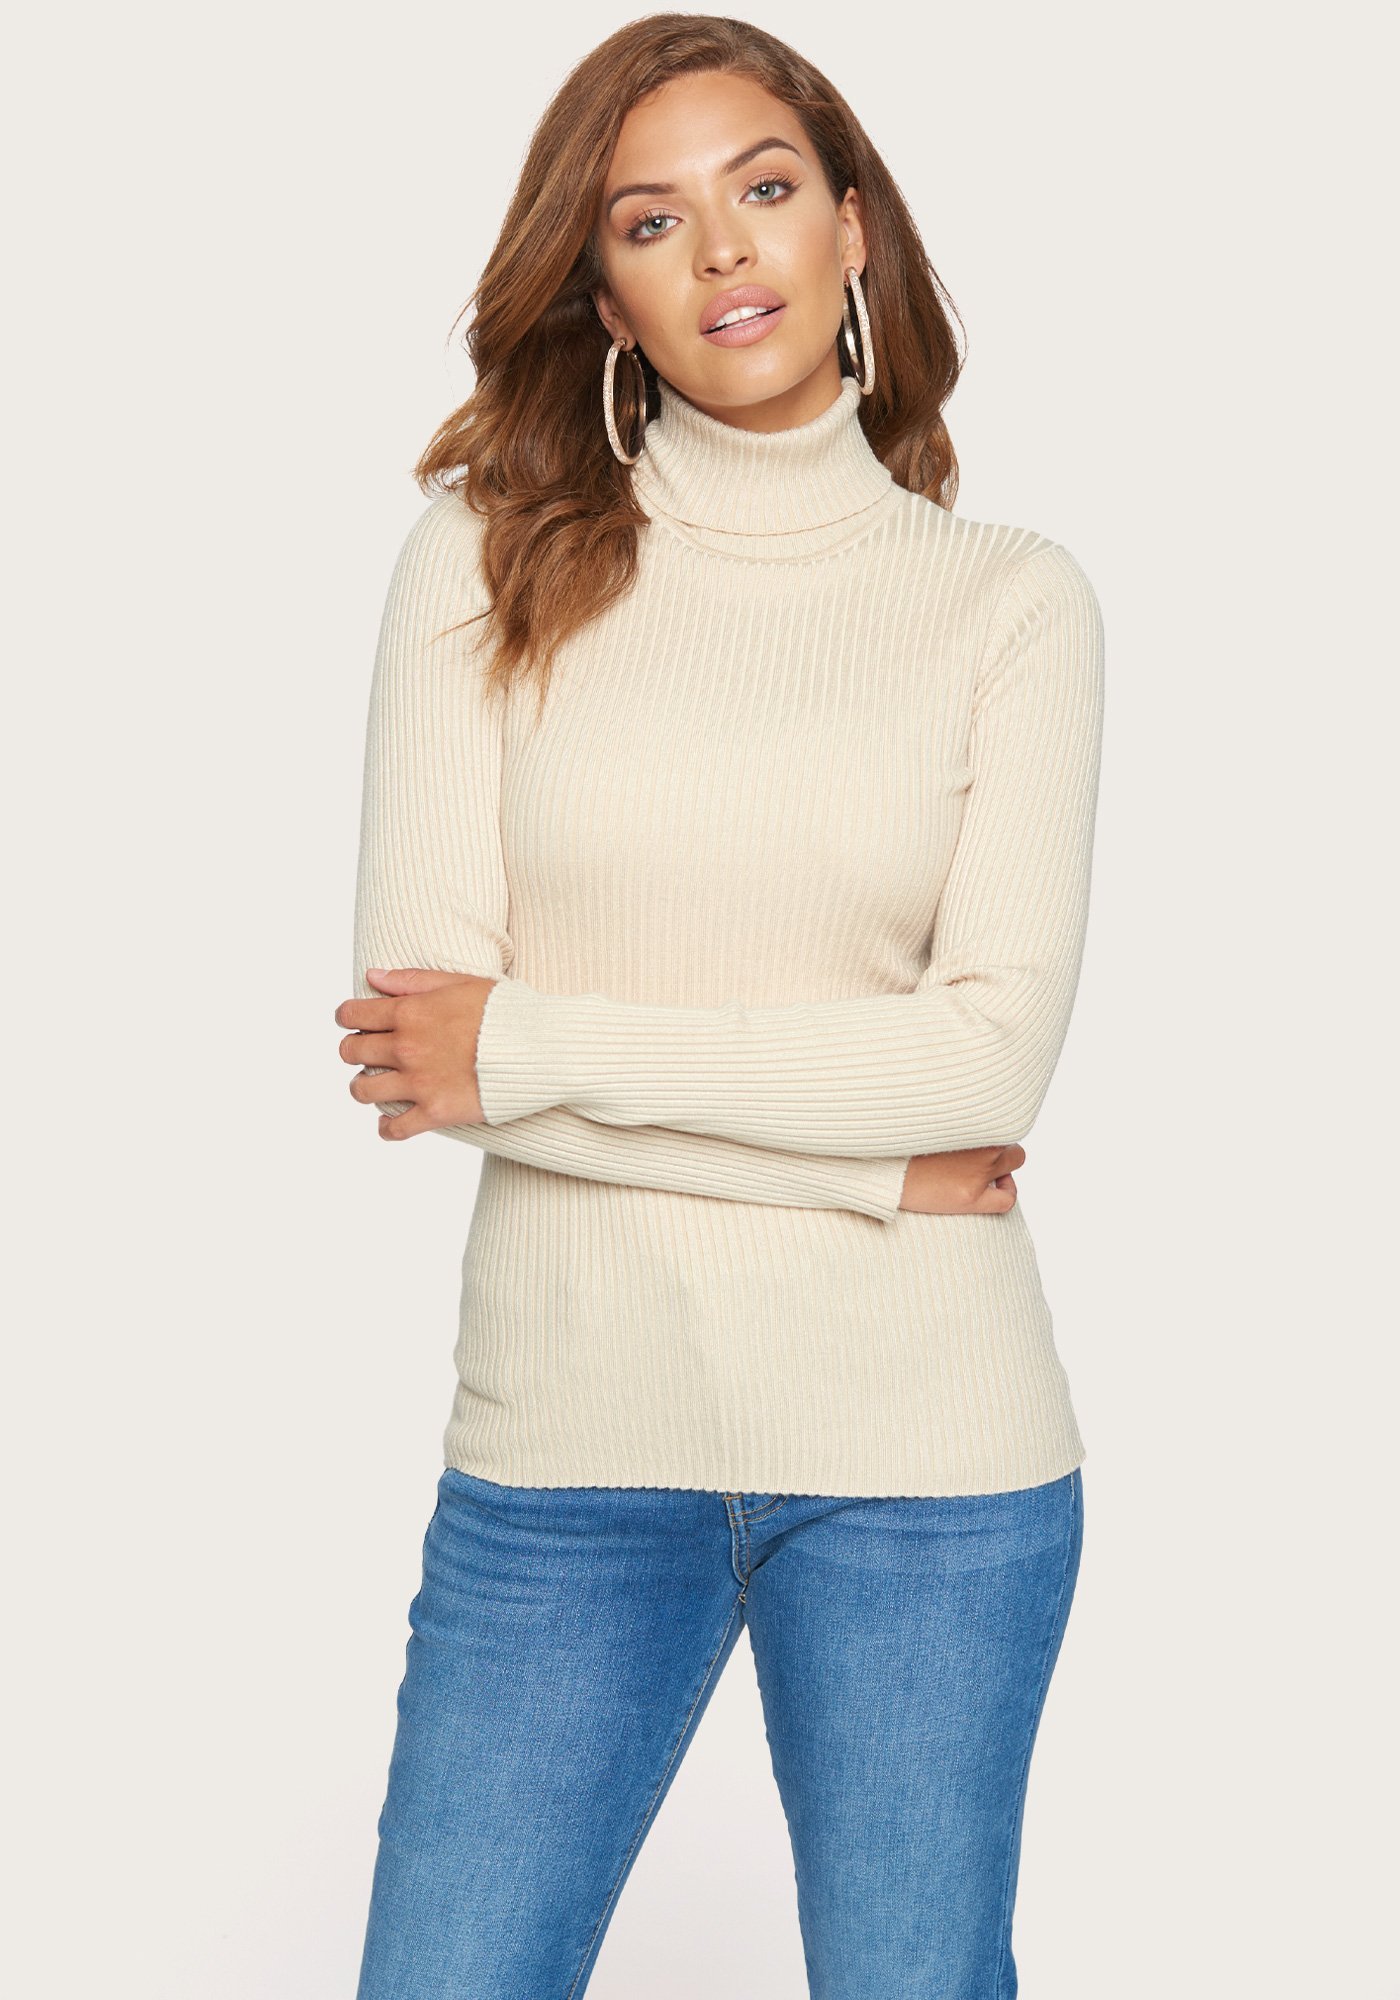 Bebe Women's Turtleneck Sweater, Size XS in Sandshell Viscose/Nylon